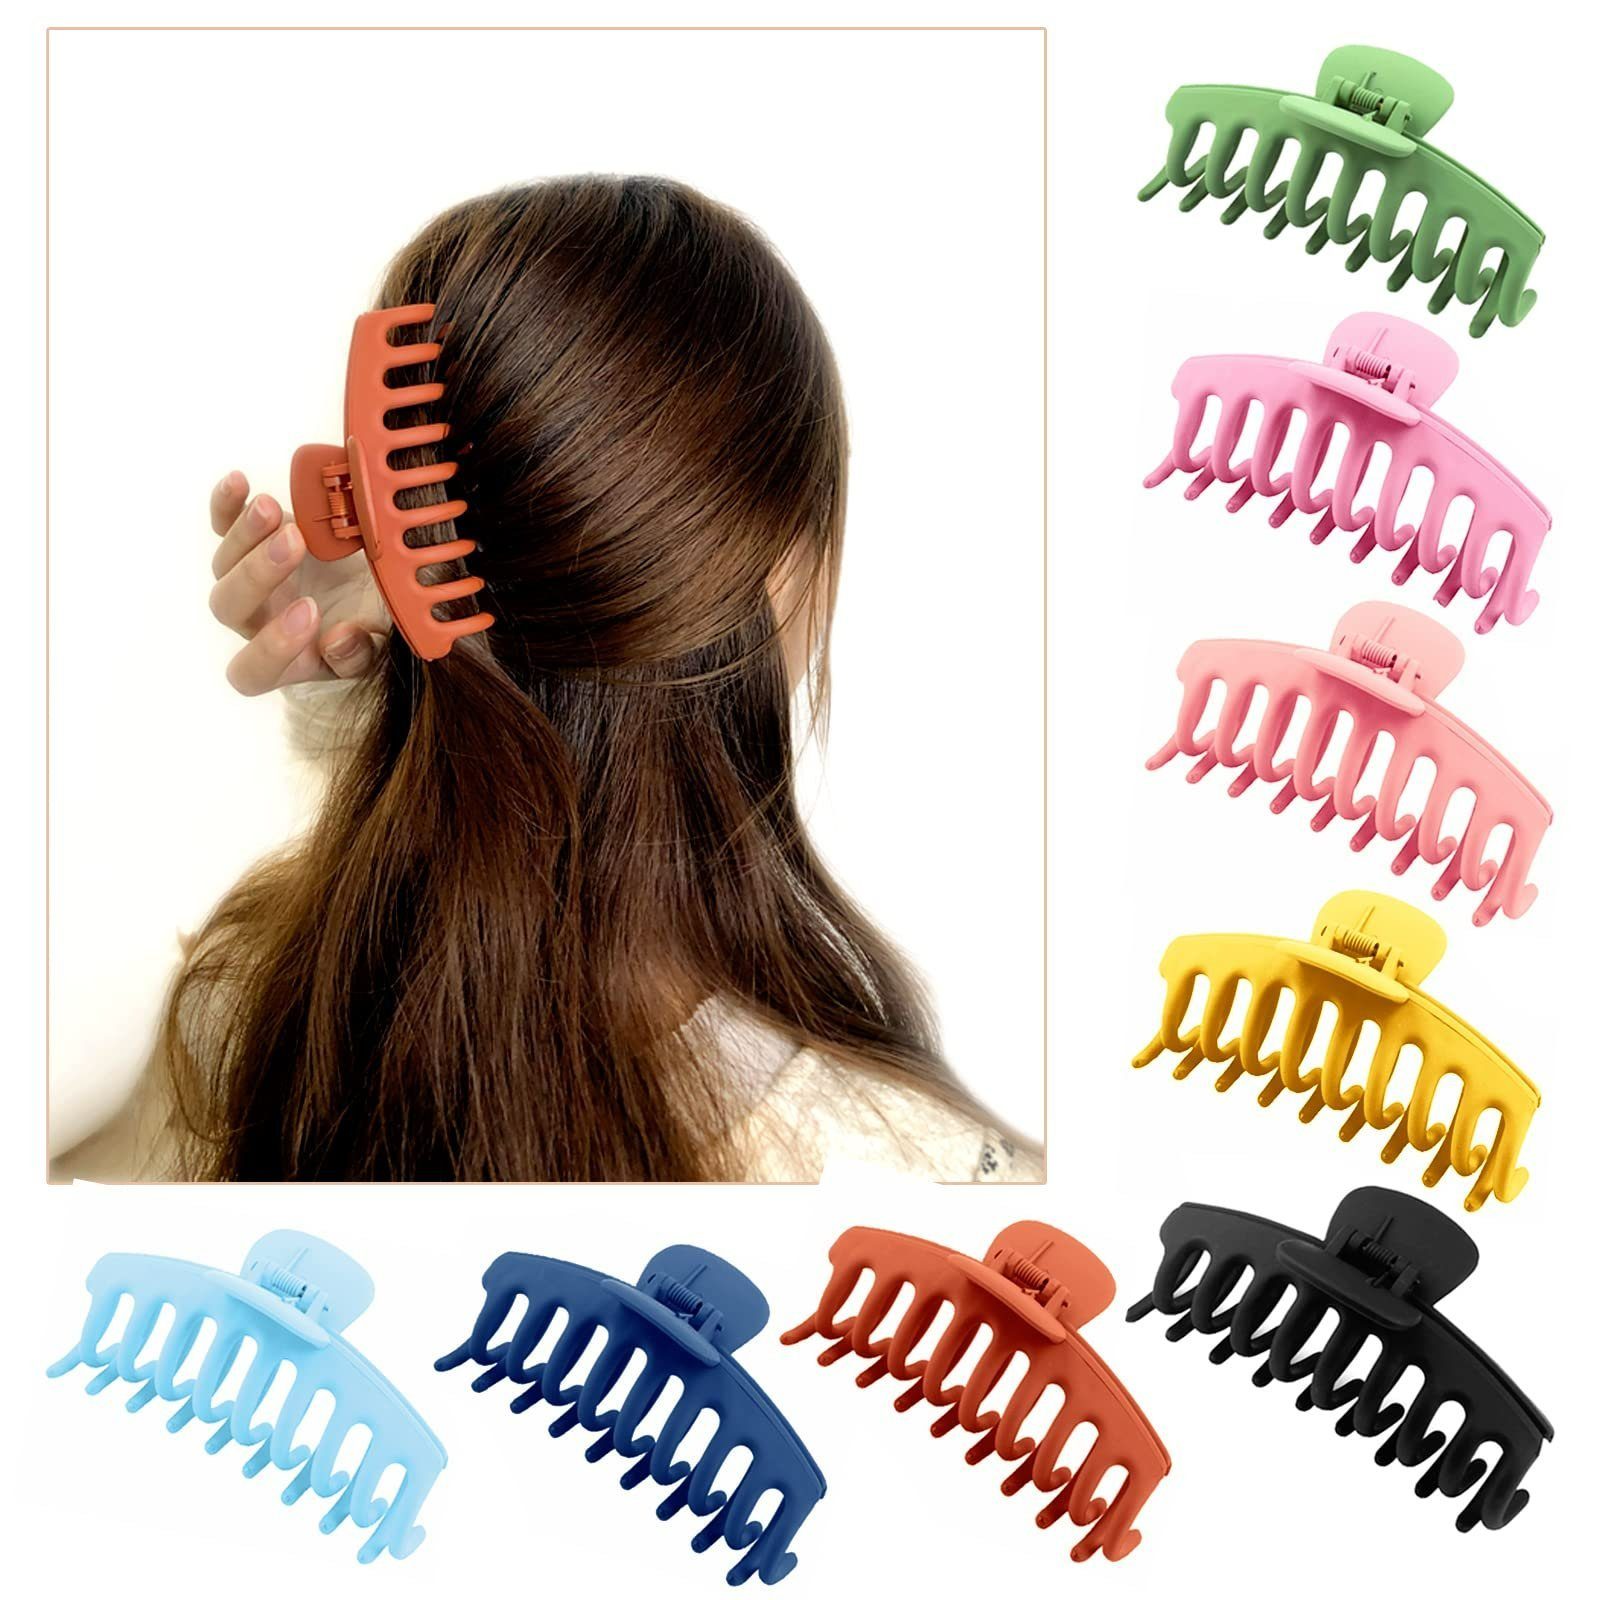 CALIYO Haarspange 8 Stück Große Haarklammer Haarnadel Rutschfeste  Haarklammer Klaue Clips Haargreifer für Damen/Frauen